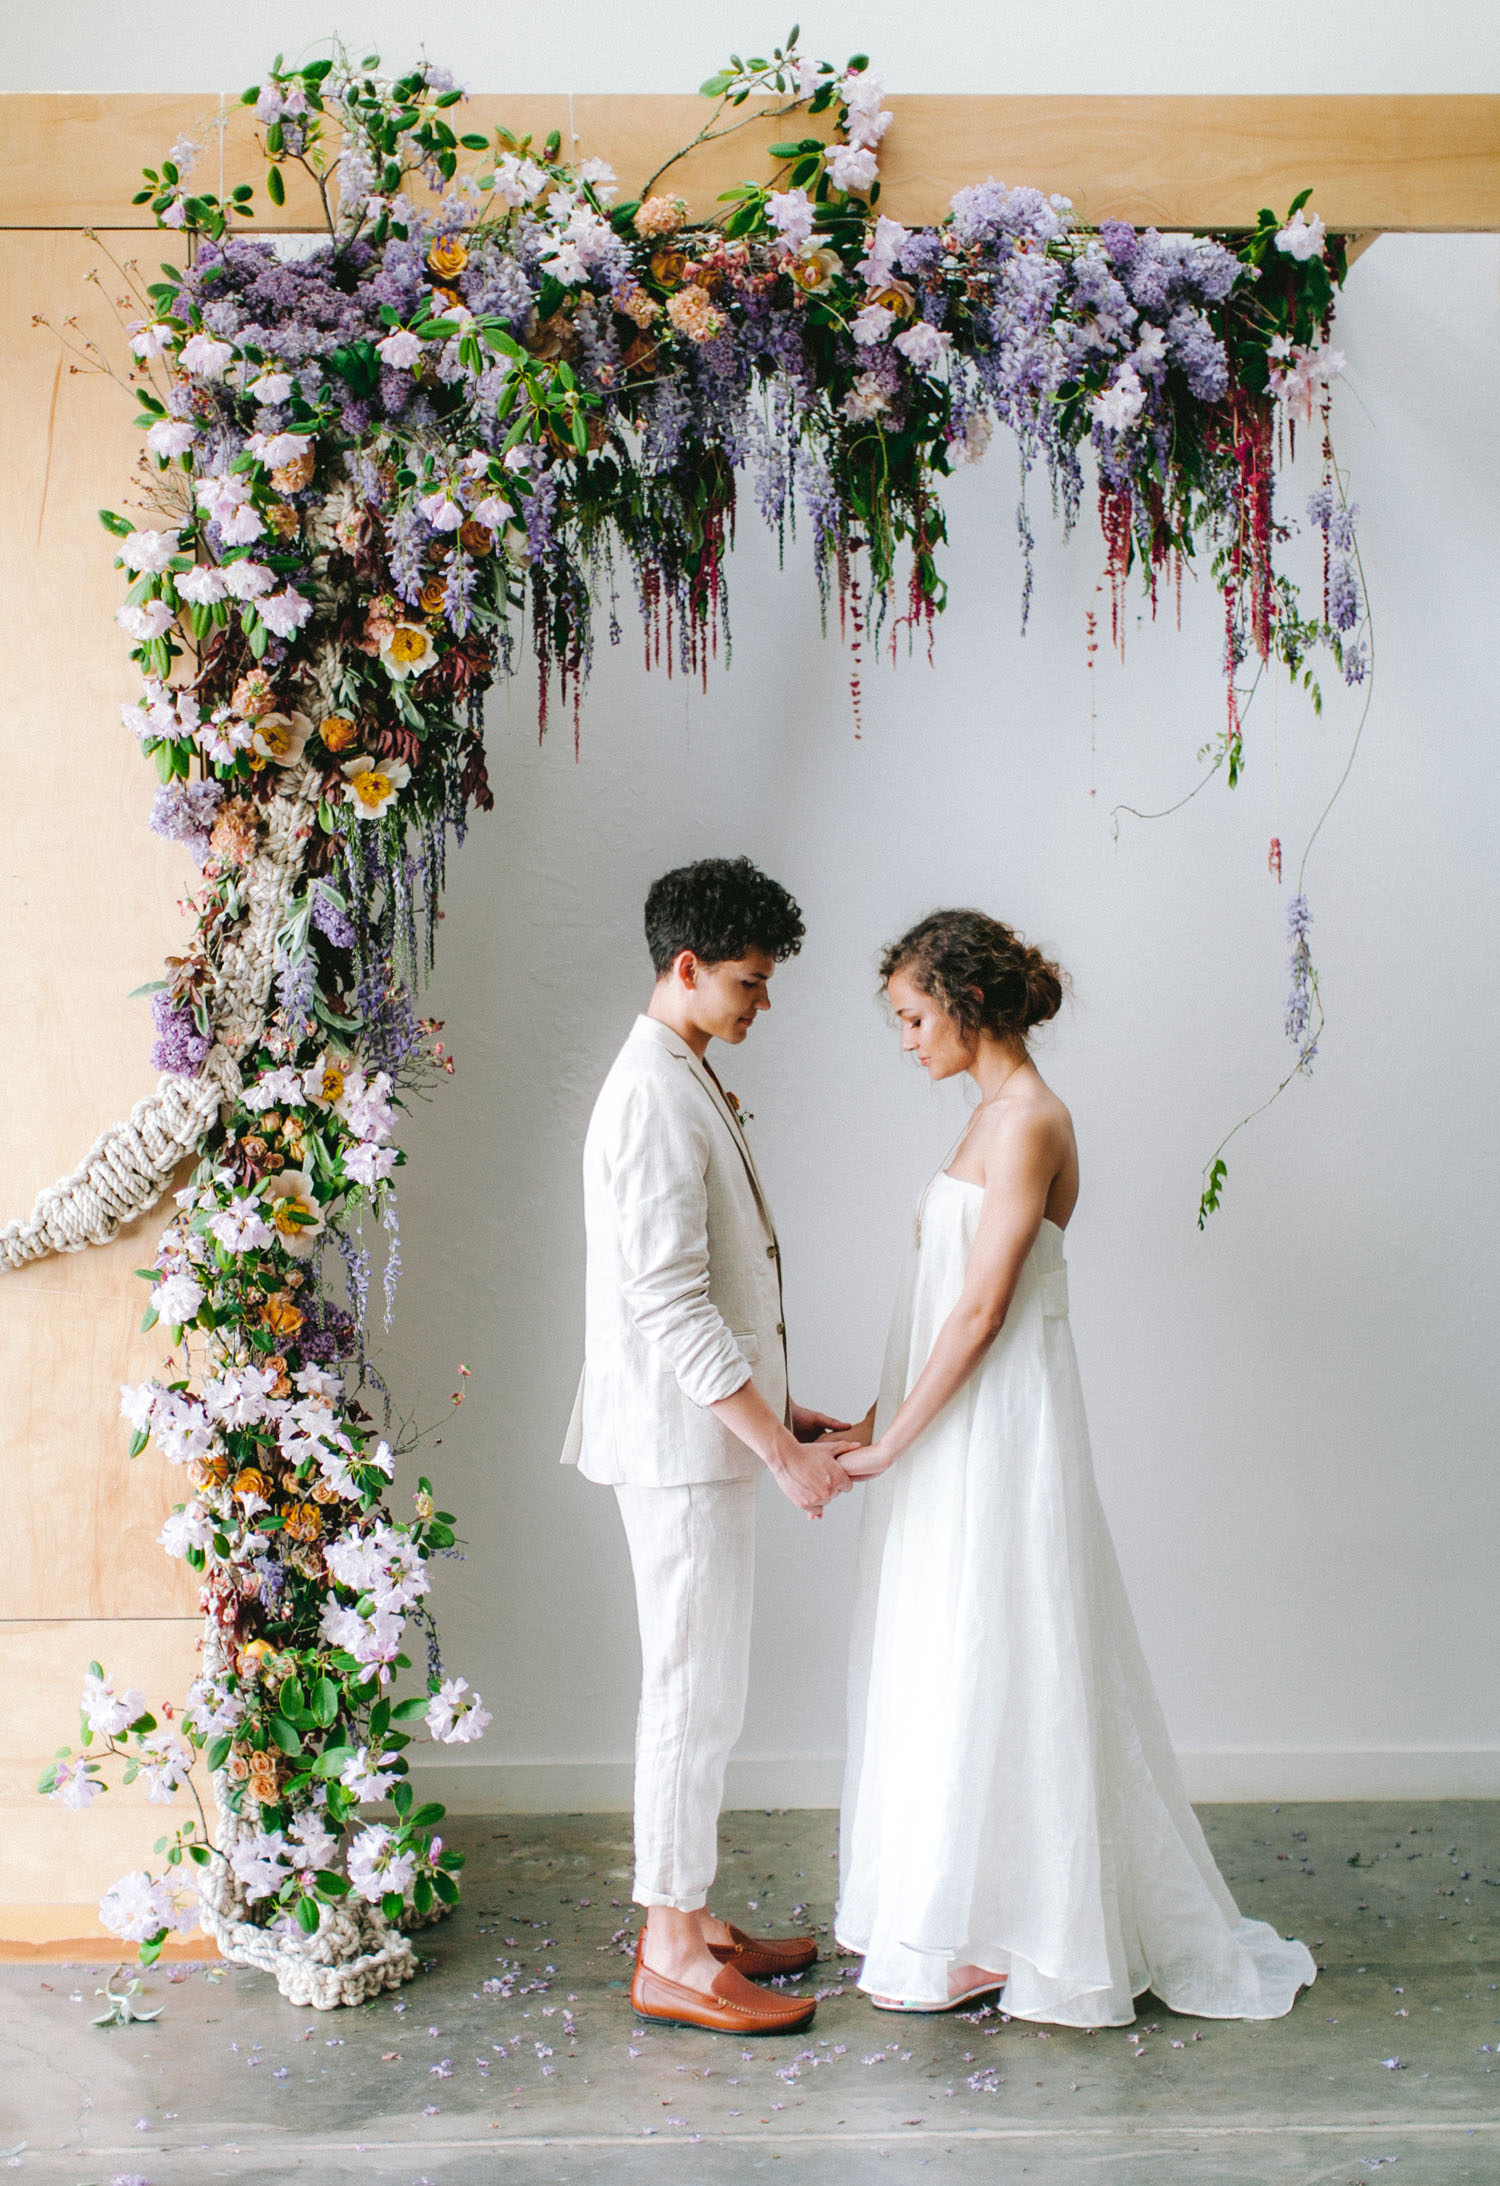 Ethereal Spring Wedding Inspiration